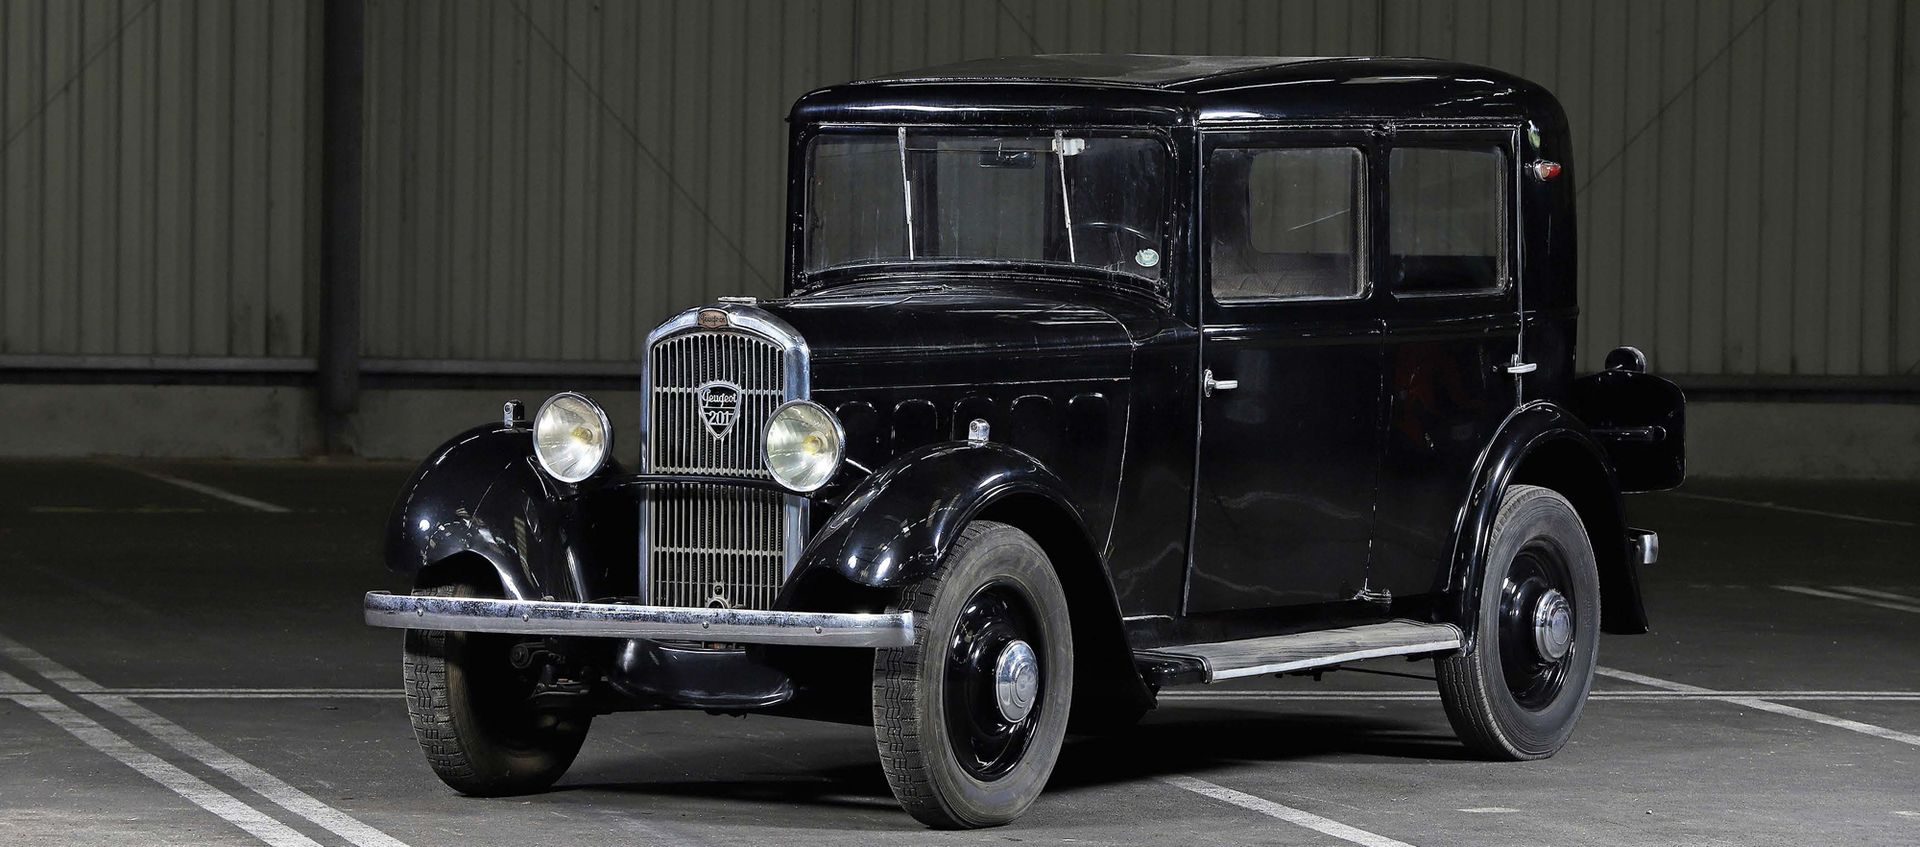 1933 PEUGEOT 201 B 
毫无保留



标志性的标致汽车

更加创新的B版

高质量的修复



法国注册

不含技术控制的销售

底盘编号66&hellip;